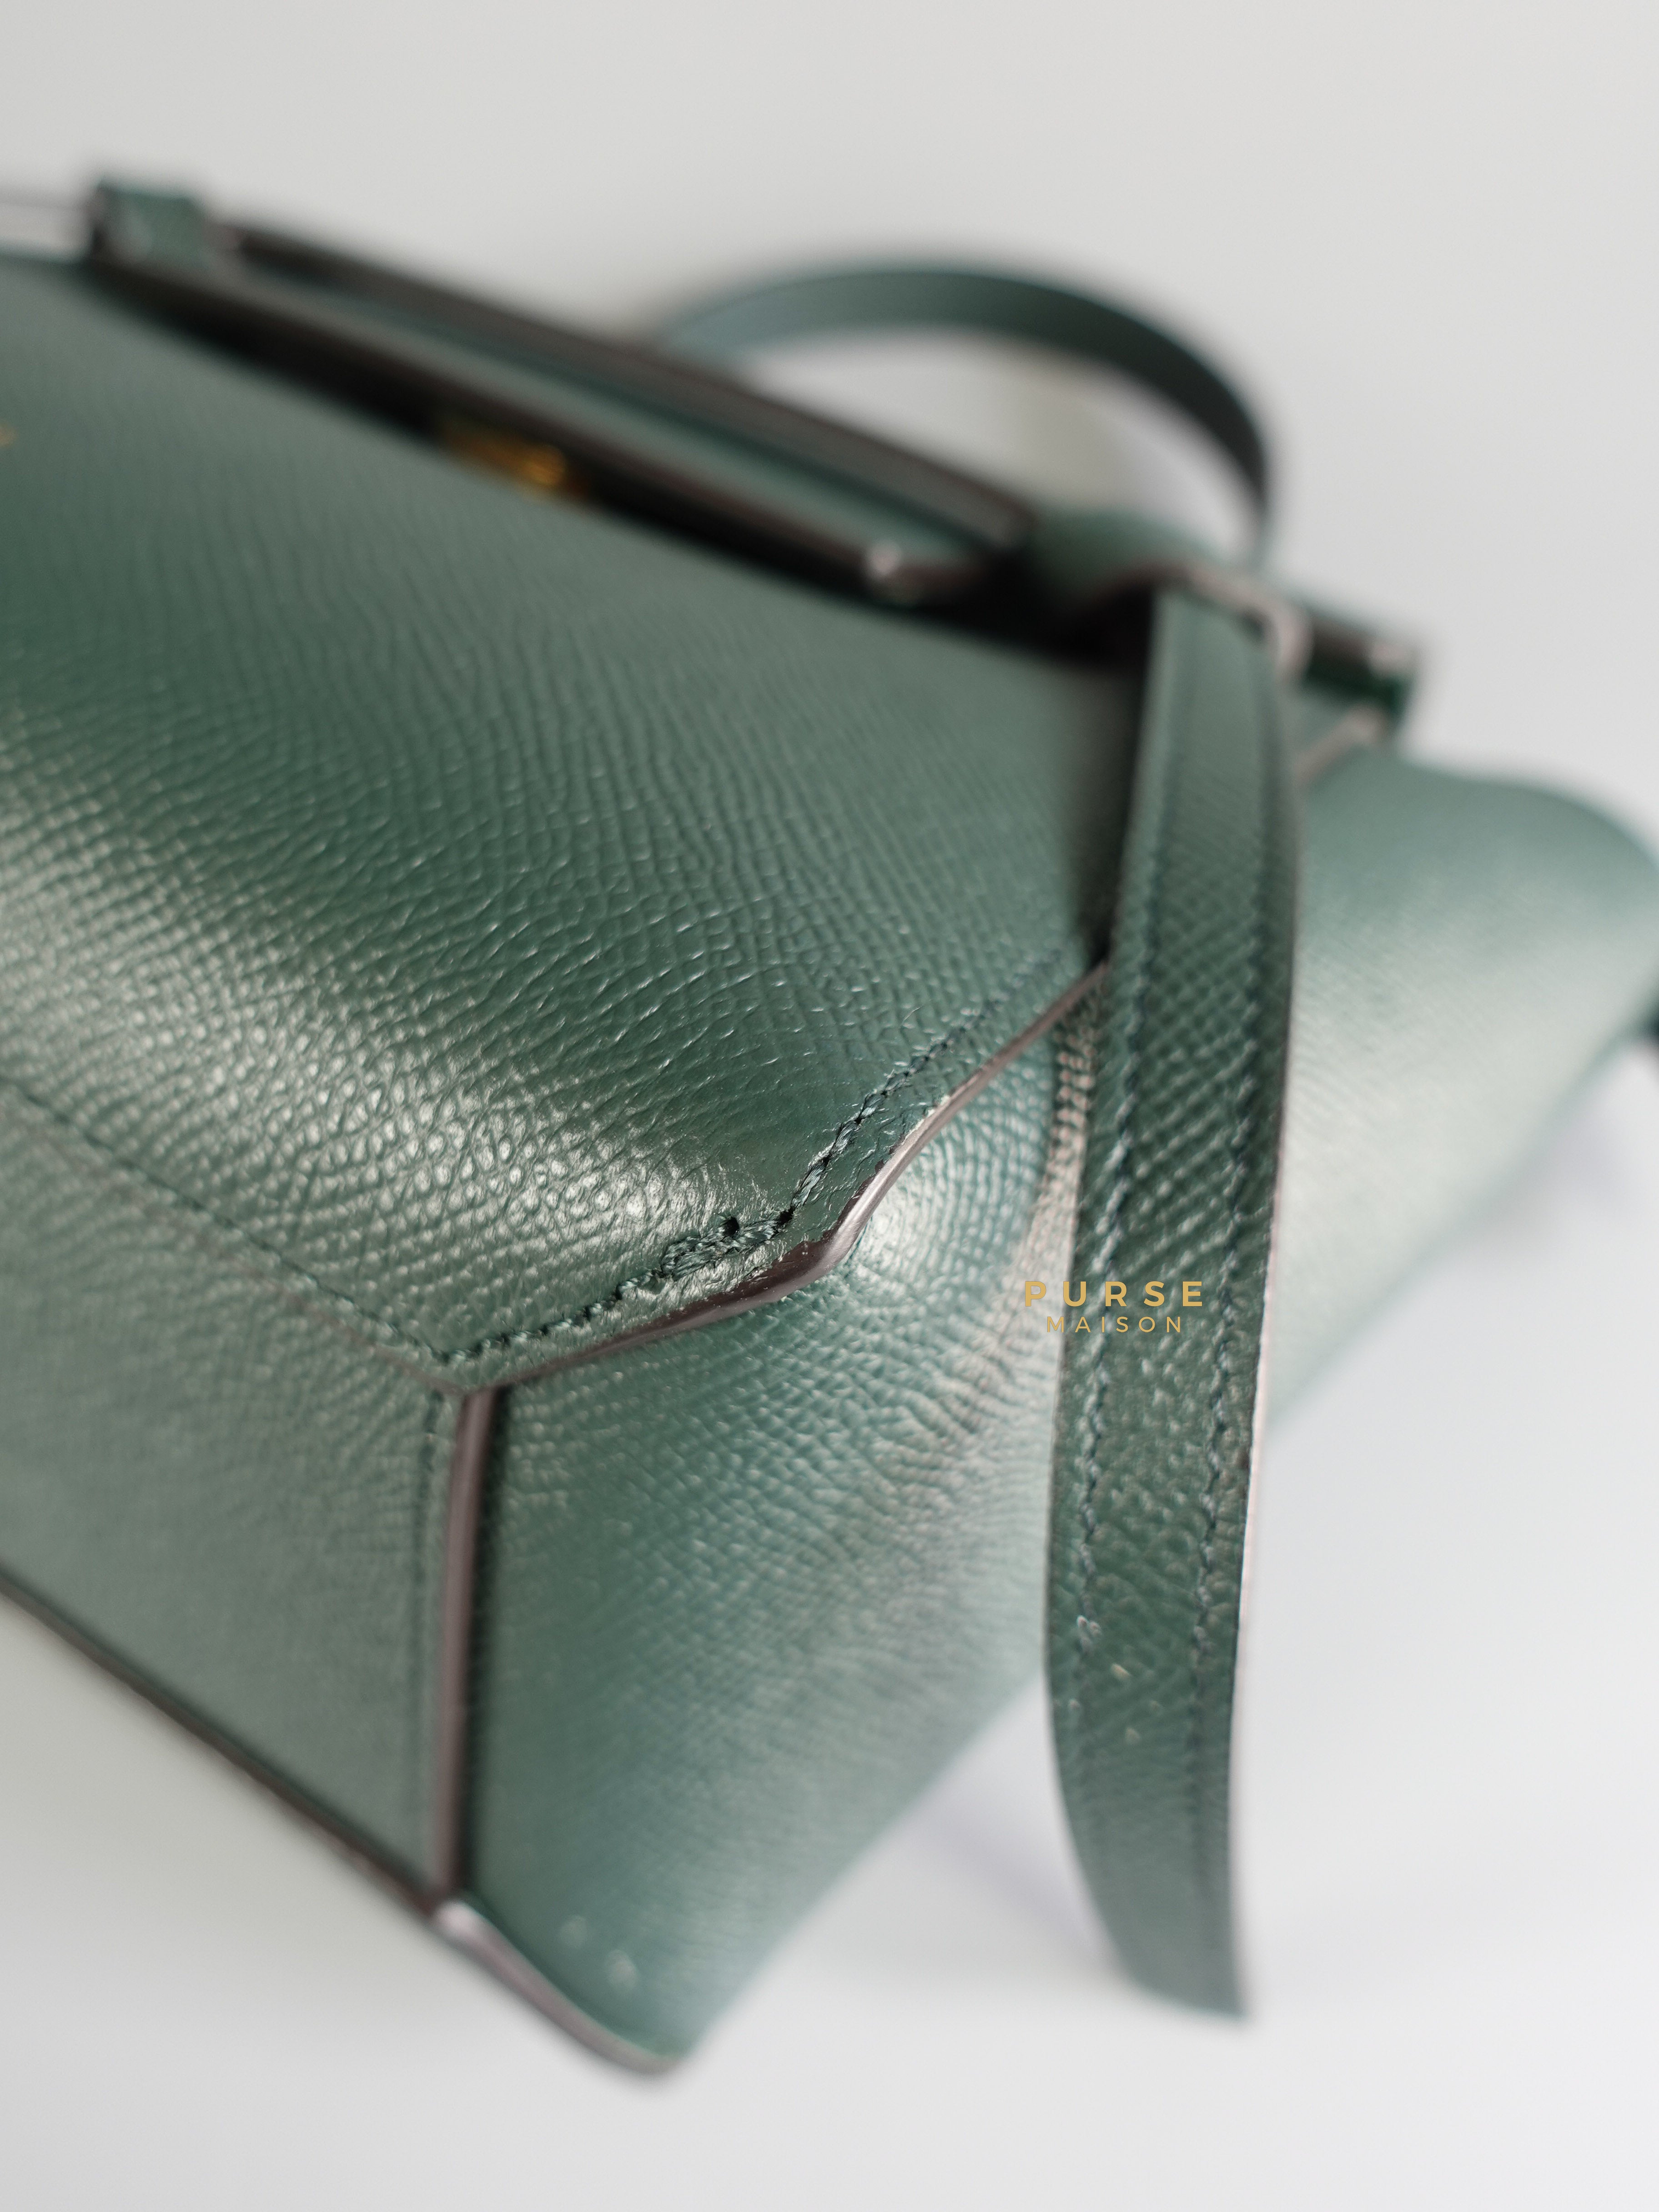 Celine Nano Belt Bag Grained Calfskin (Amazone) | Purse Maison Luxury Bags Shop